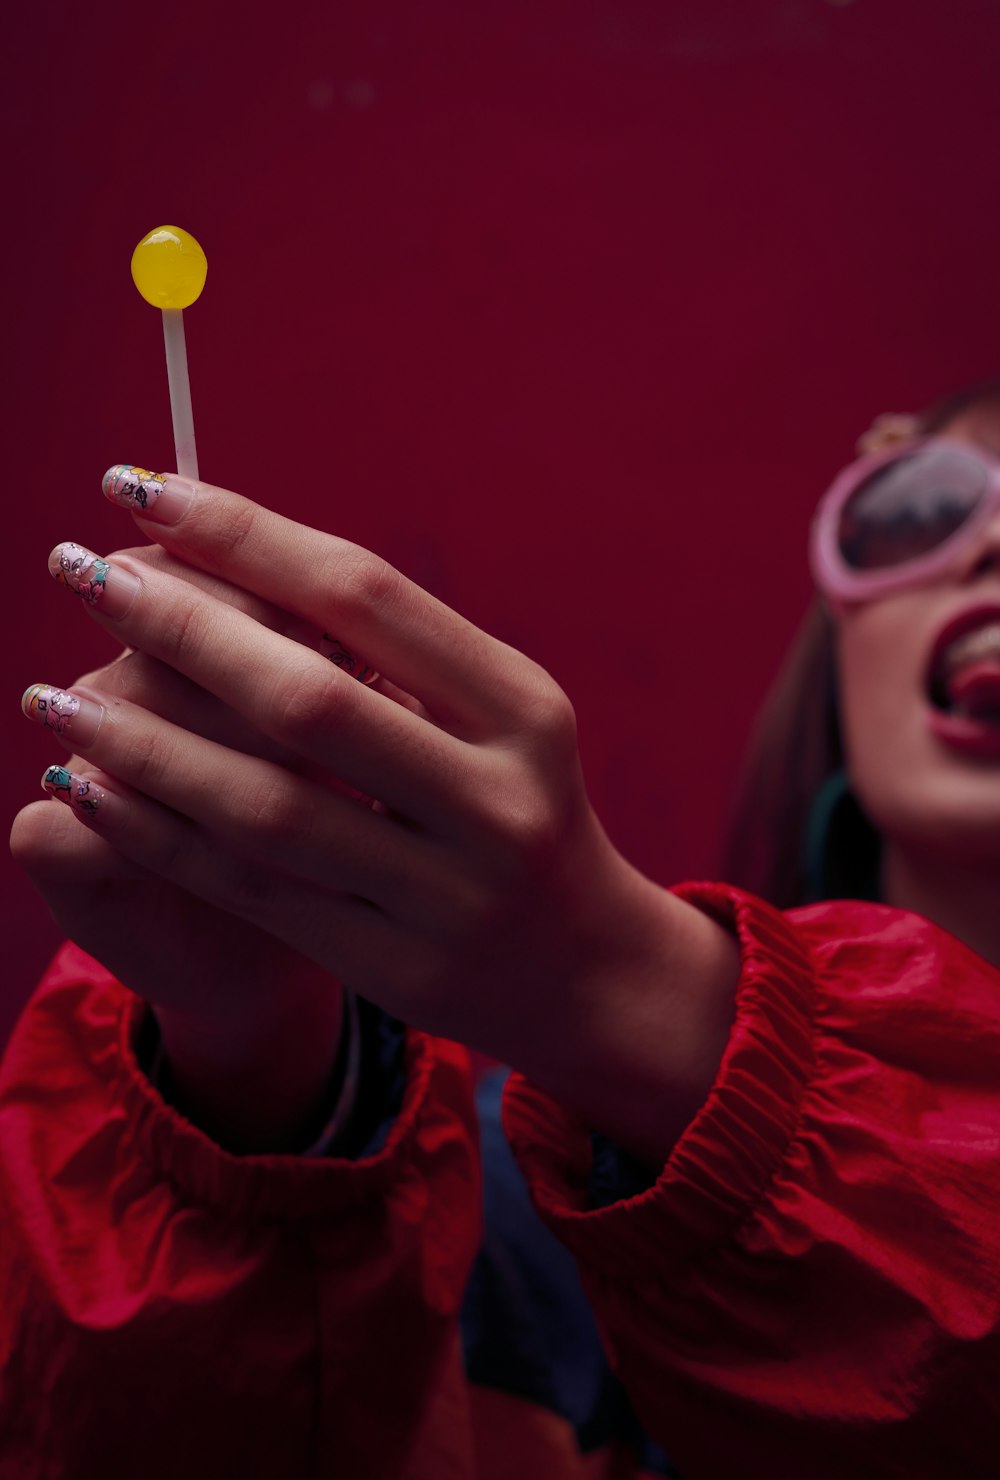 person holding lollipop